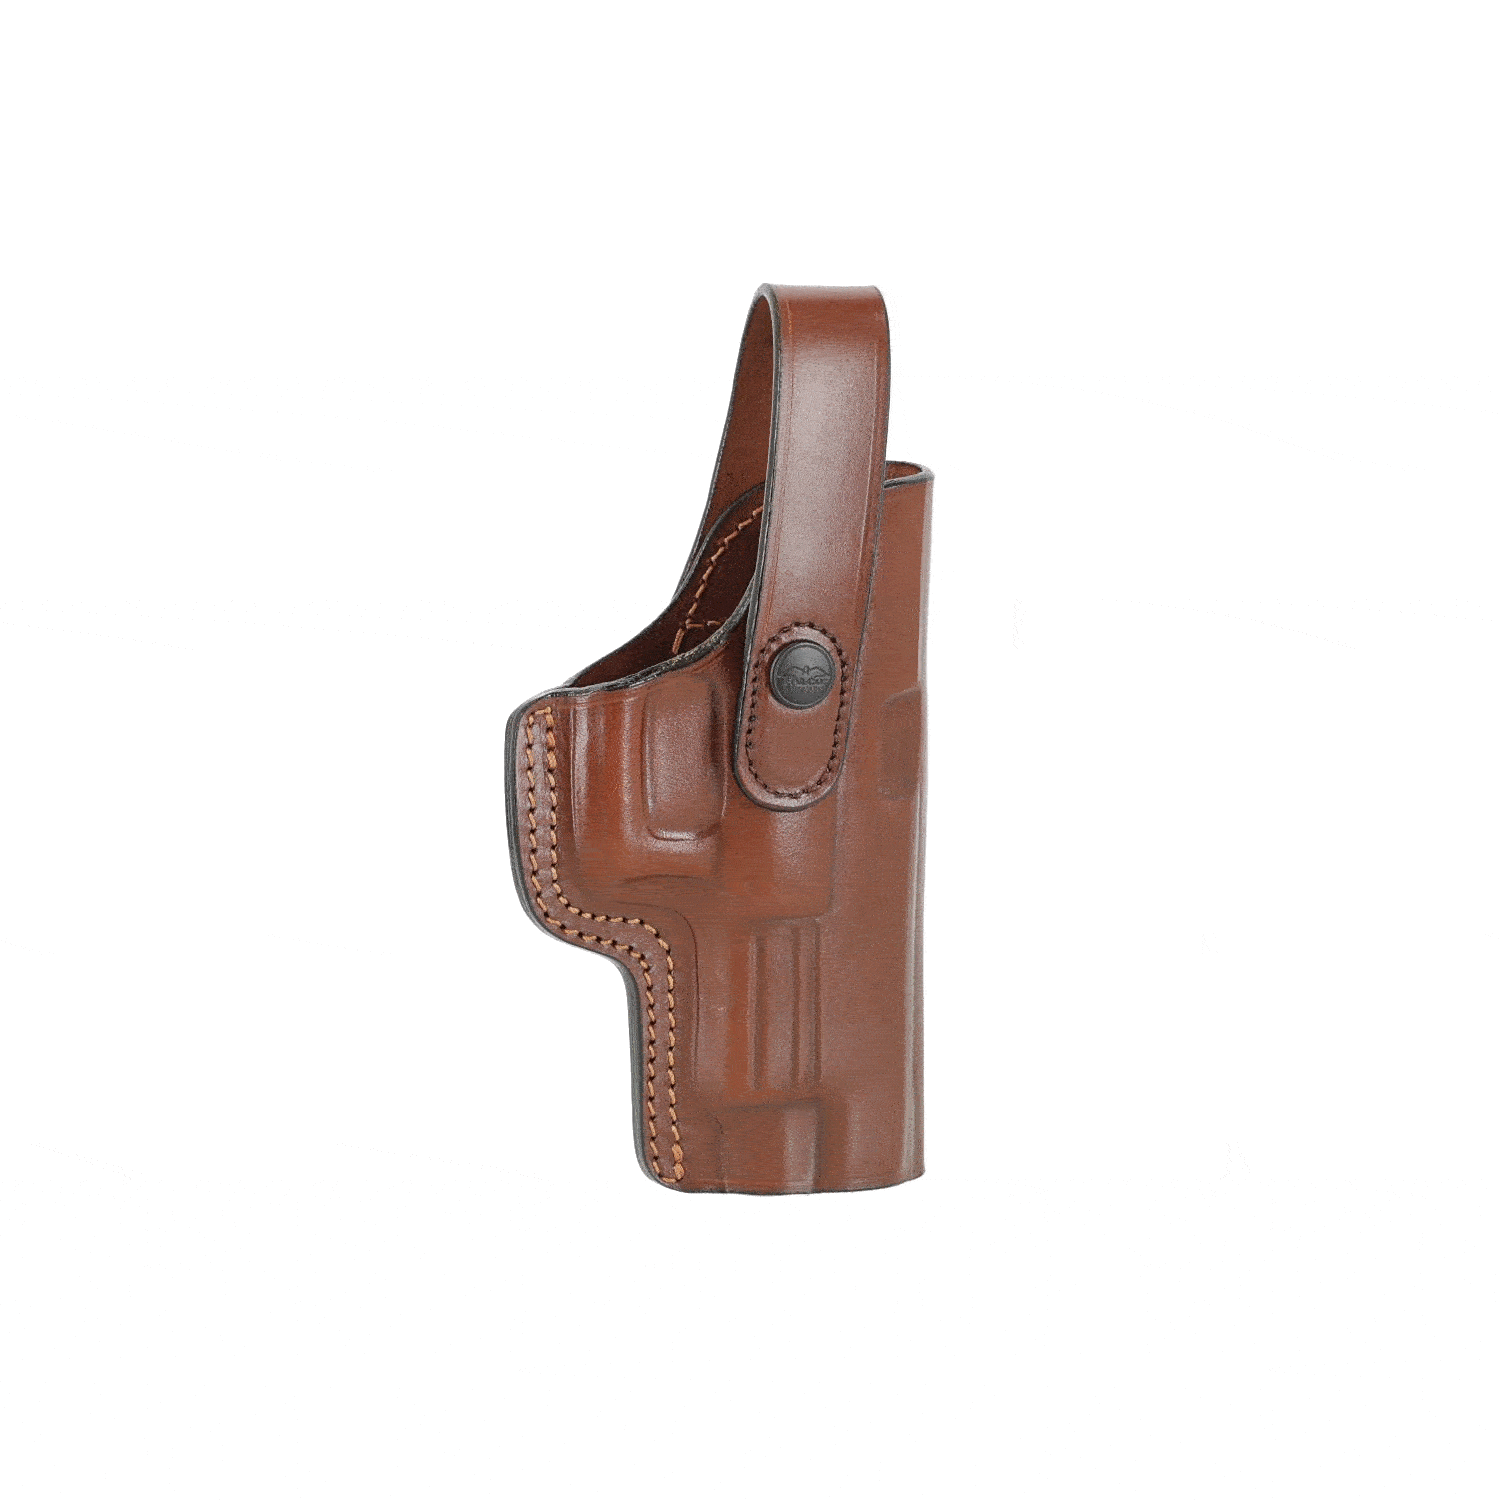 Slim design OWB belt leather holster with front security strap